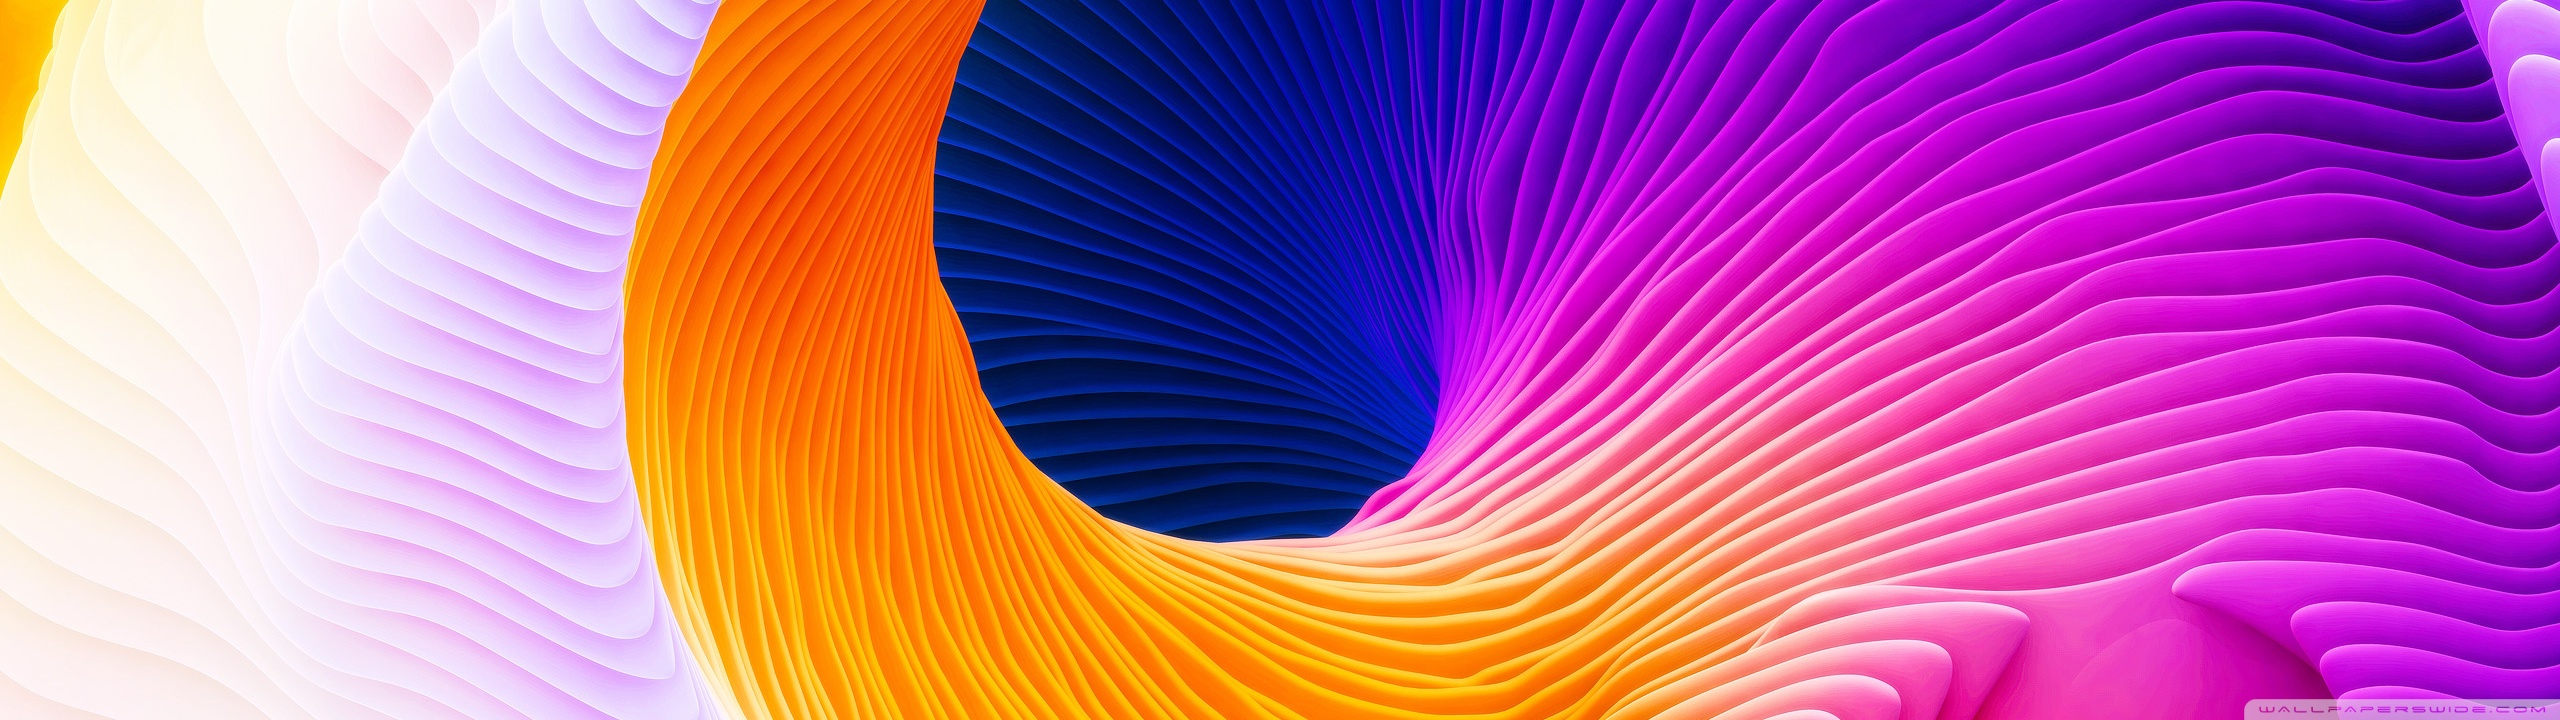 3D Abstract Spiral Ultra HD Desktop Background Wallpaper for ...